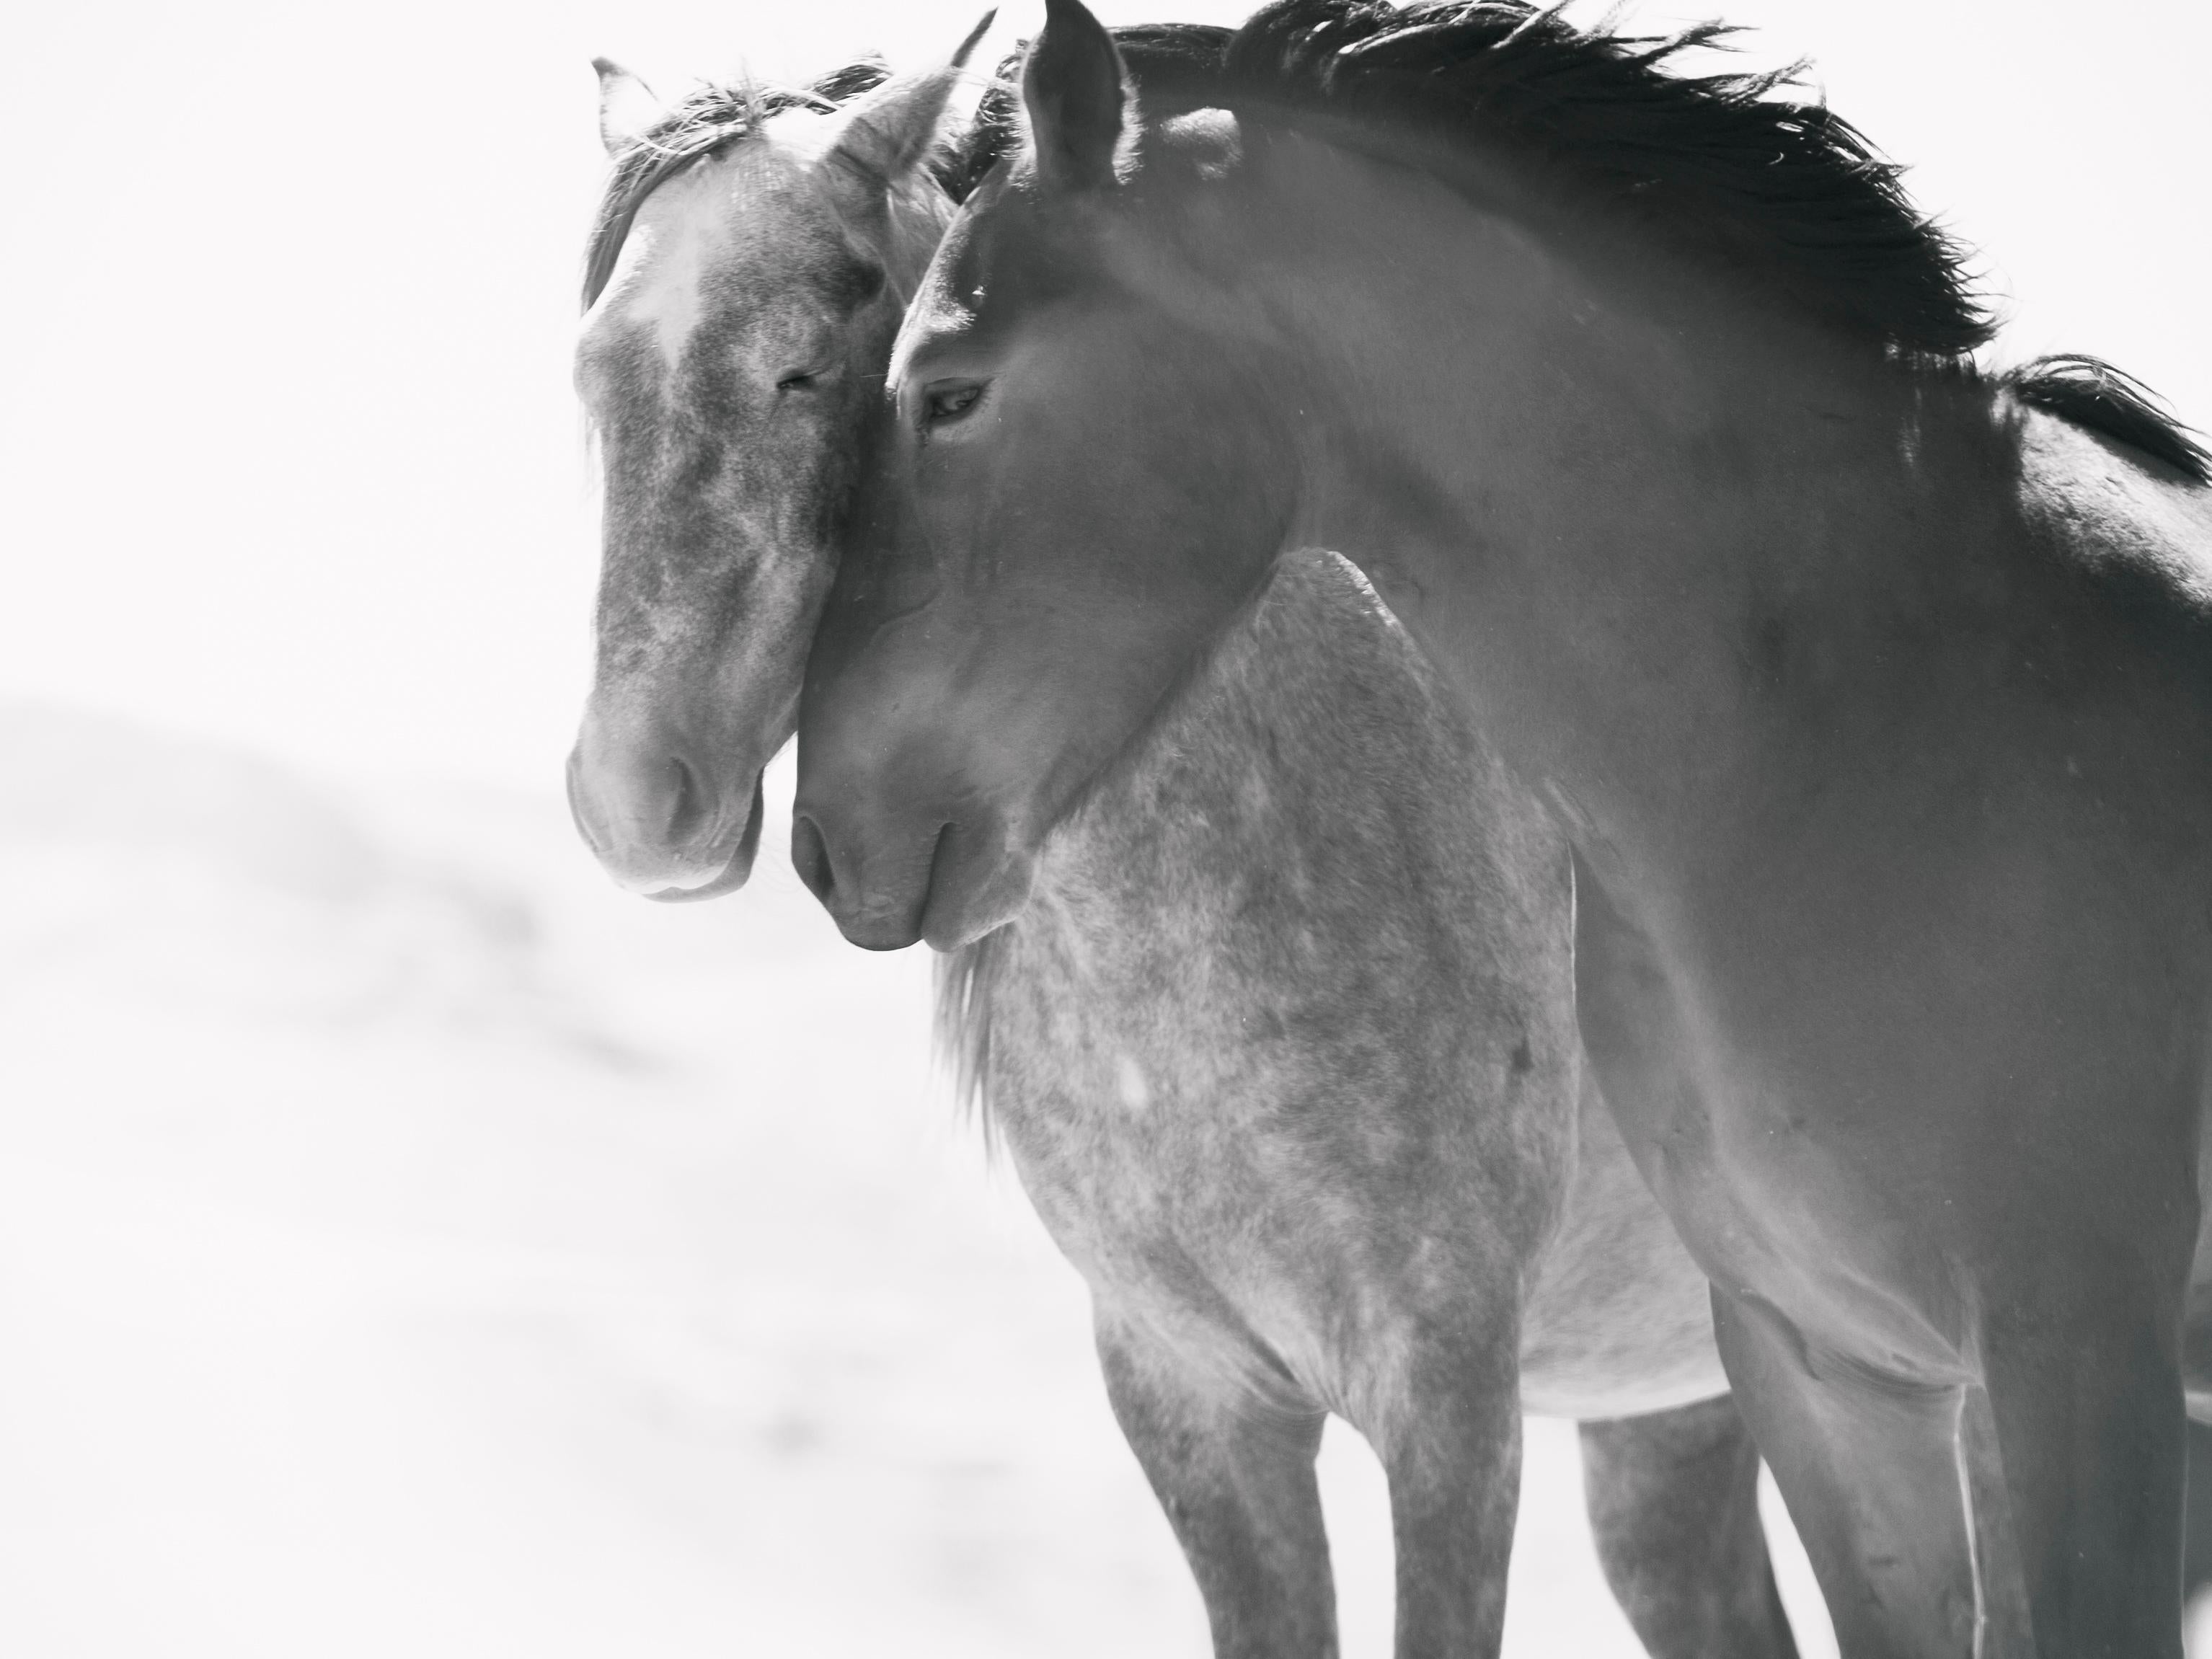 Black and White Photograph Shane Russeck - "Ames soeurs"  Photographie 28x40 noir et blanc - Chevaux sauvages - Mustangs 